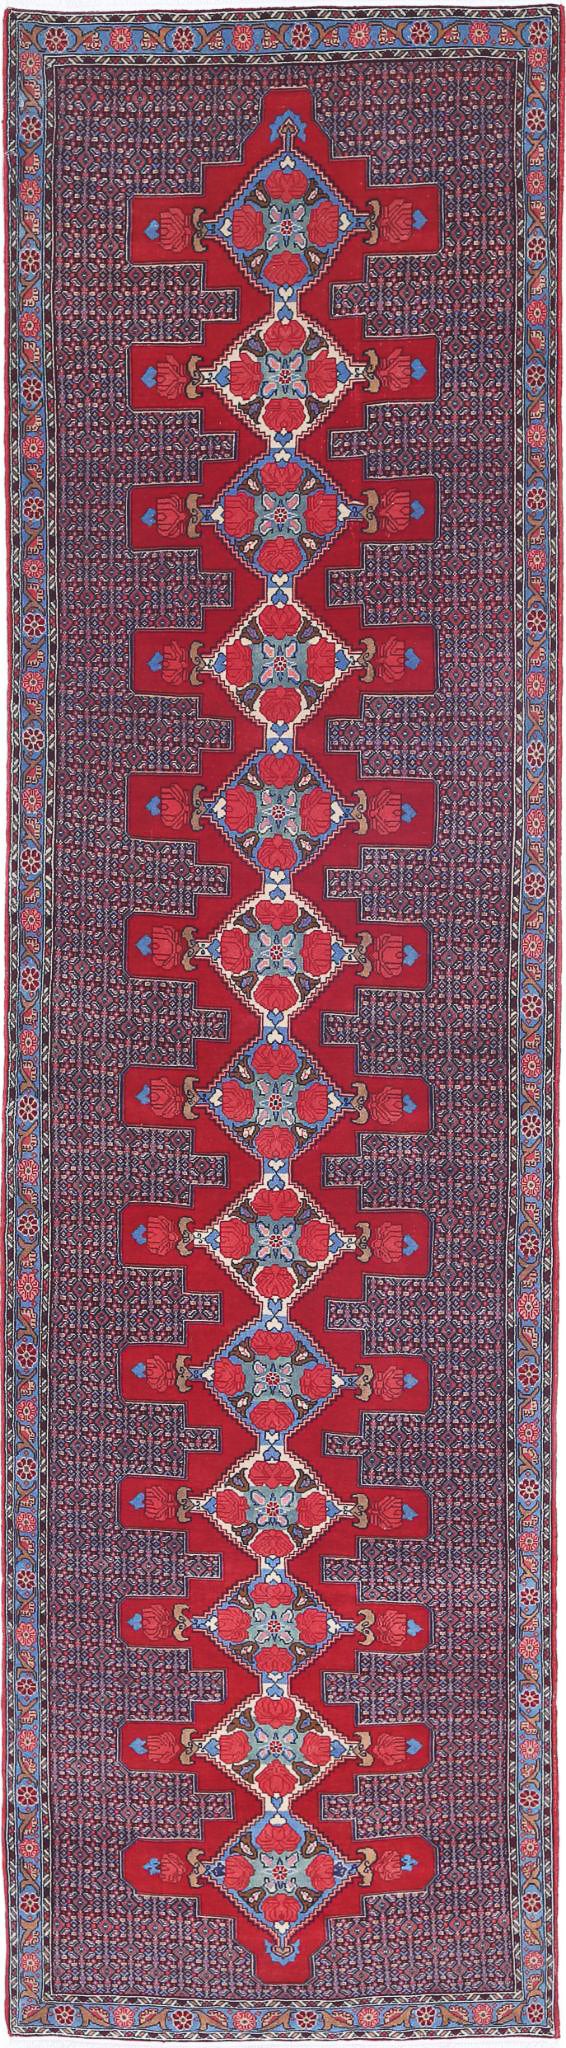 hand-knotted-senneh-wool-rug-5025223.jpg